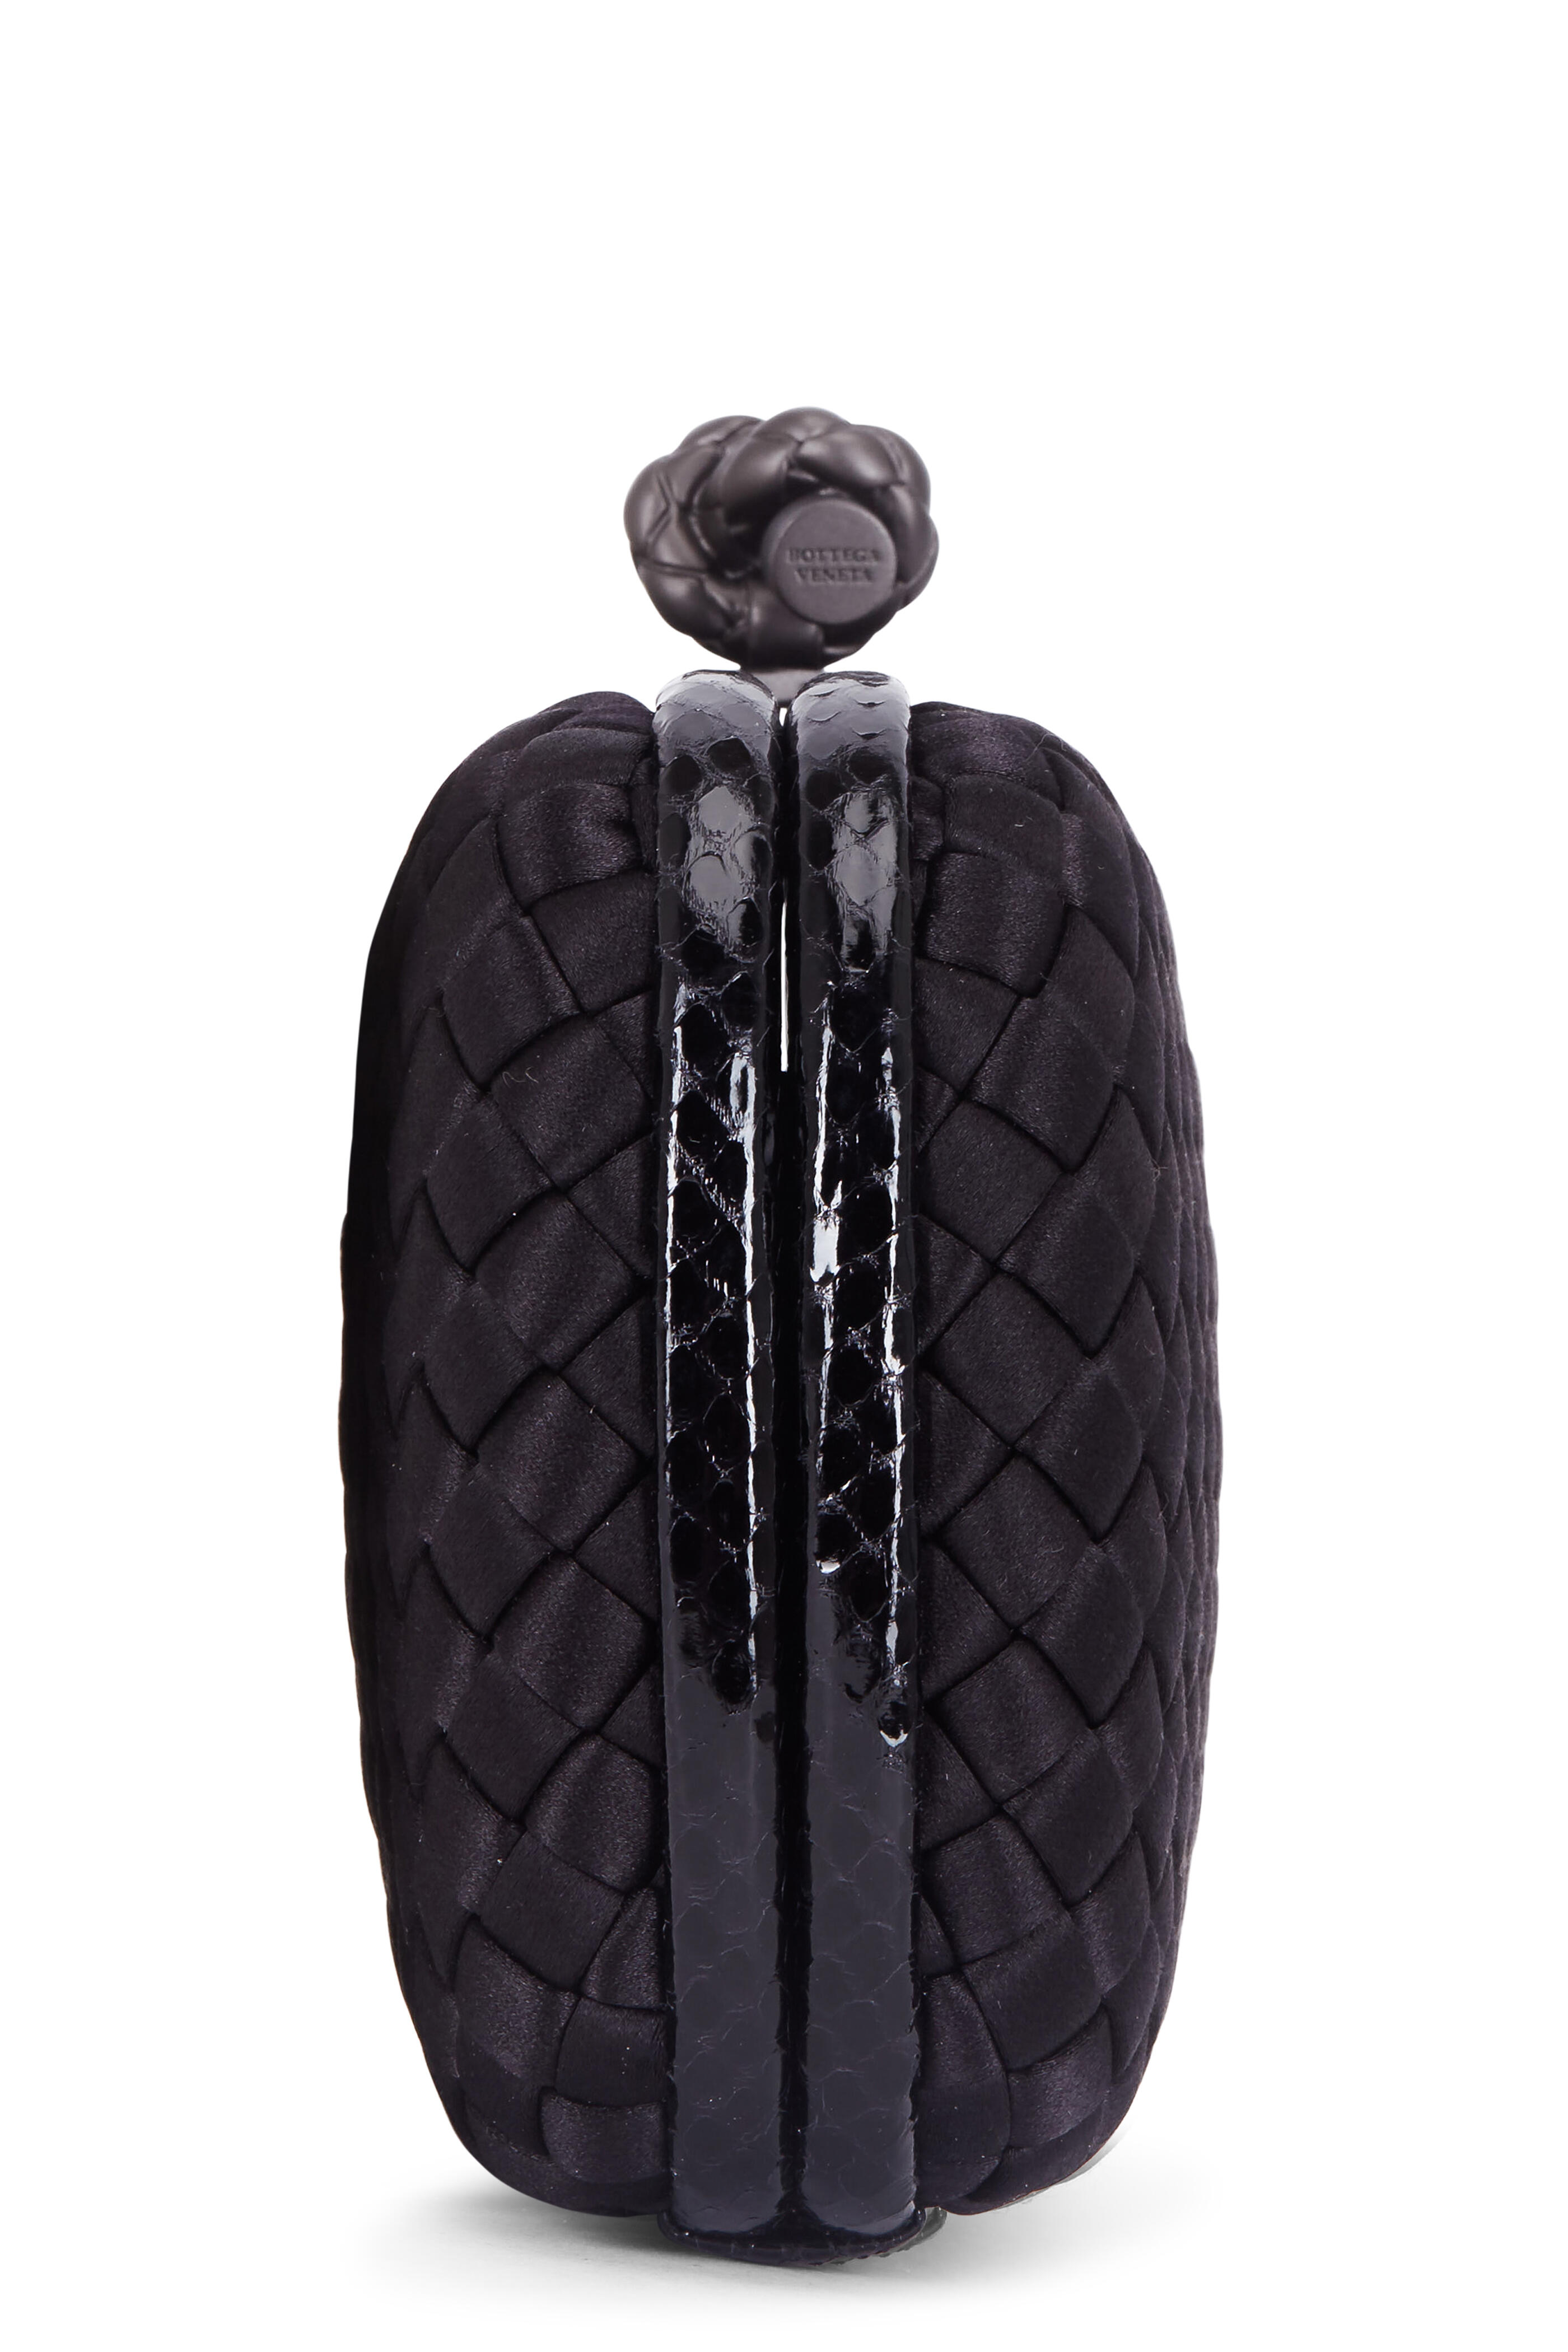 Bottega Veneta Brown Lazor Cut Leather & Snakeskin Clutch – The